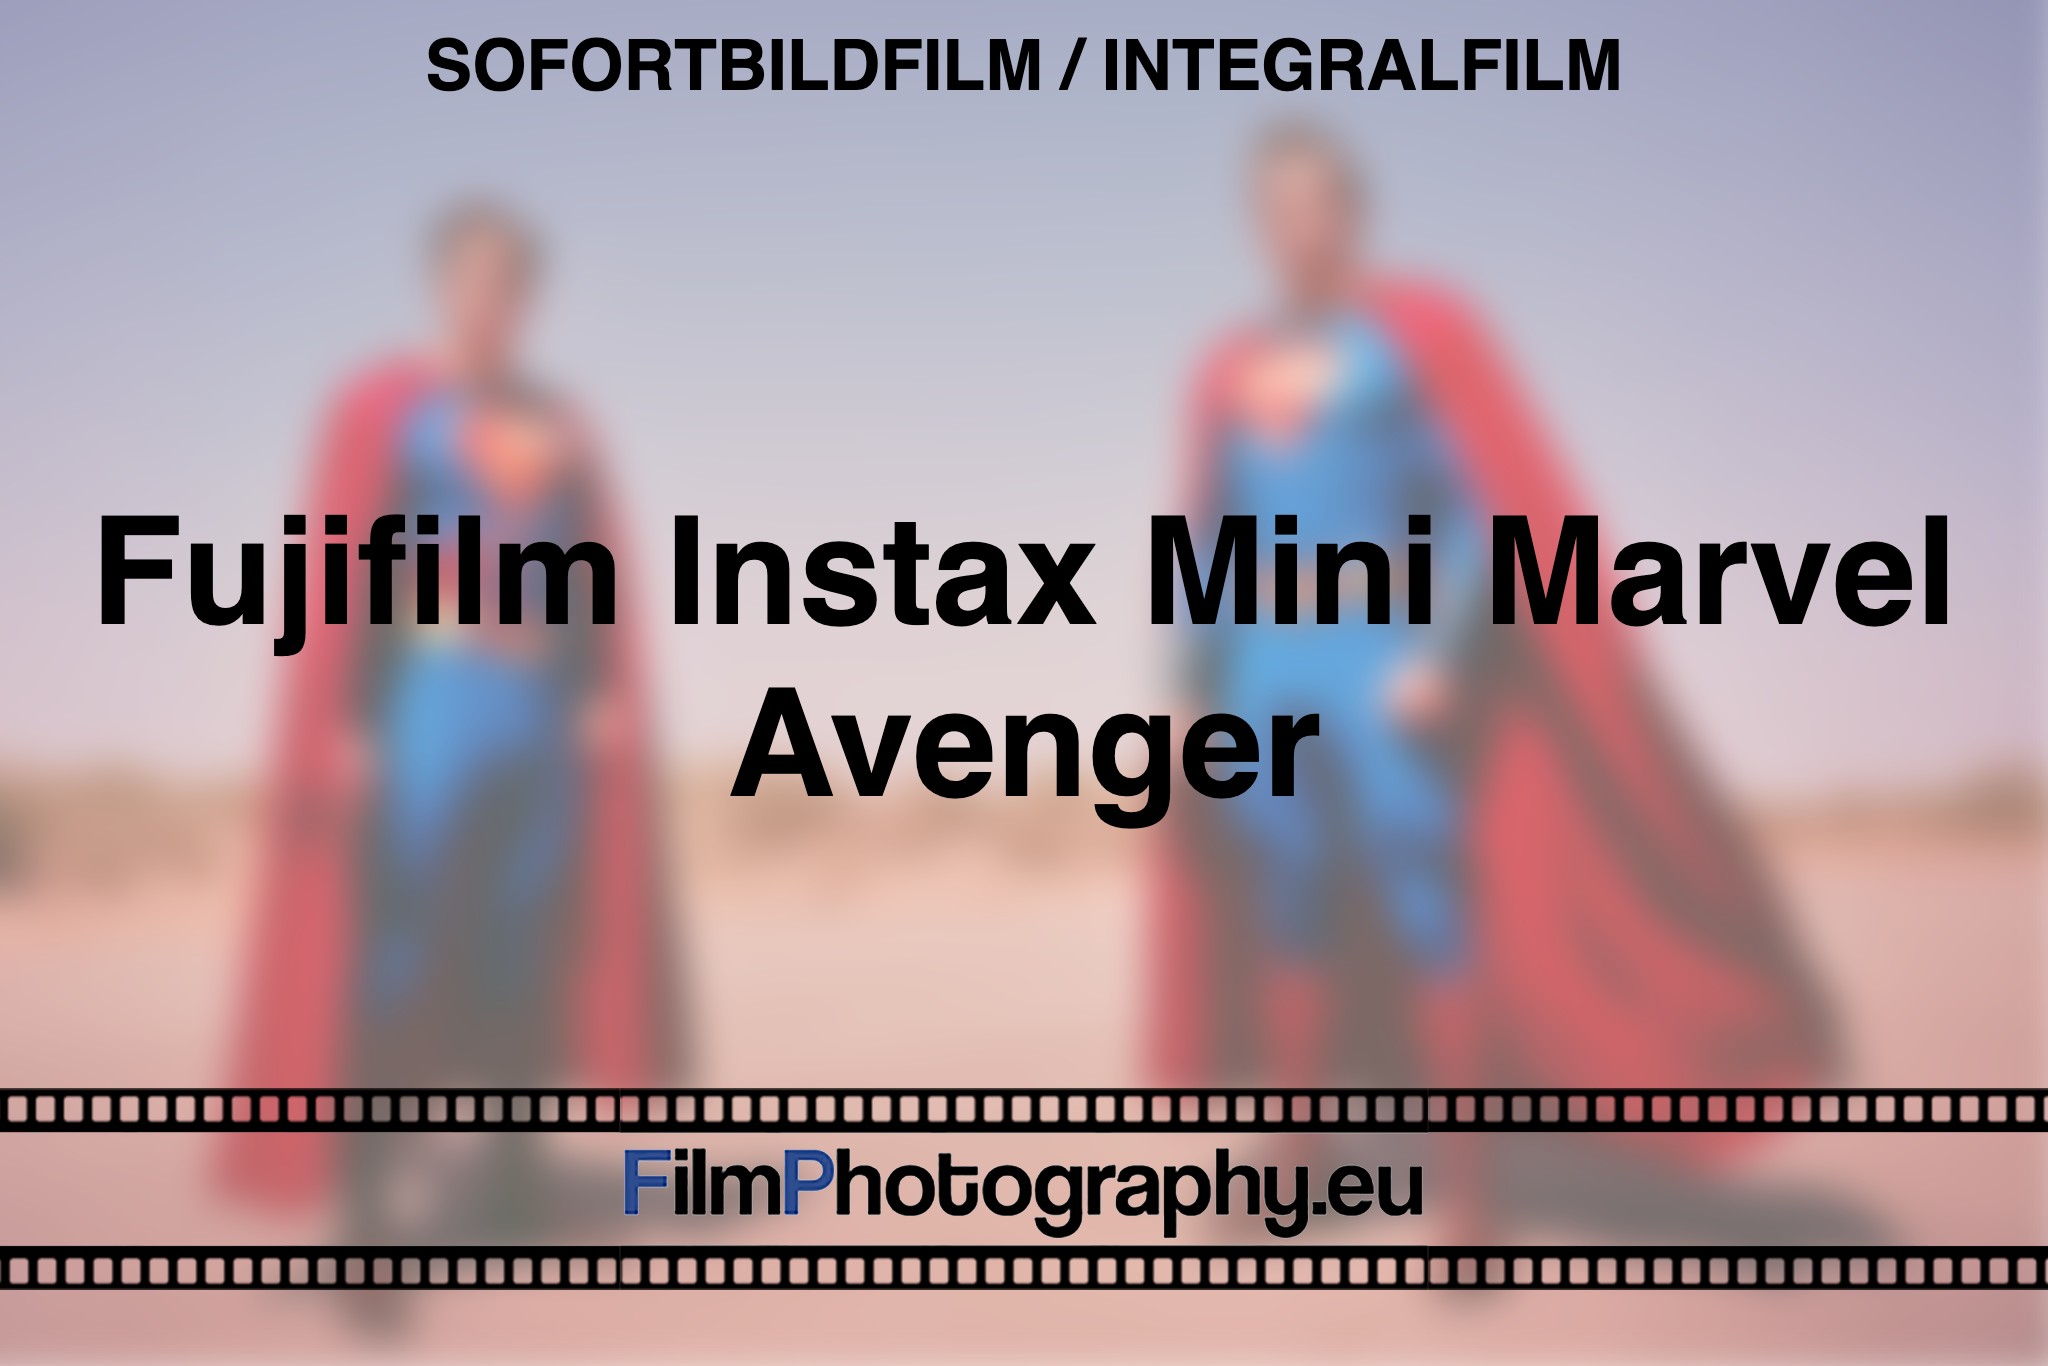 fujifilm-instax-mini-marvel-avenger-sofortbildfilm-integralfilm-fp-bnv